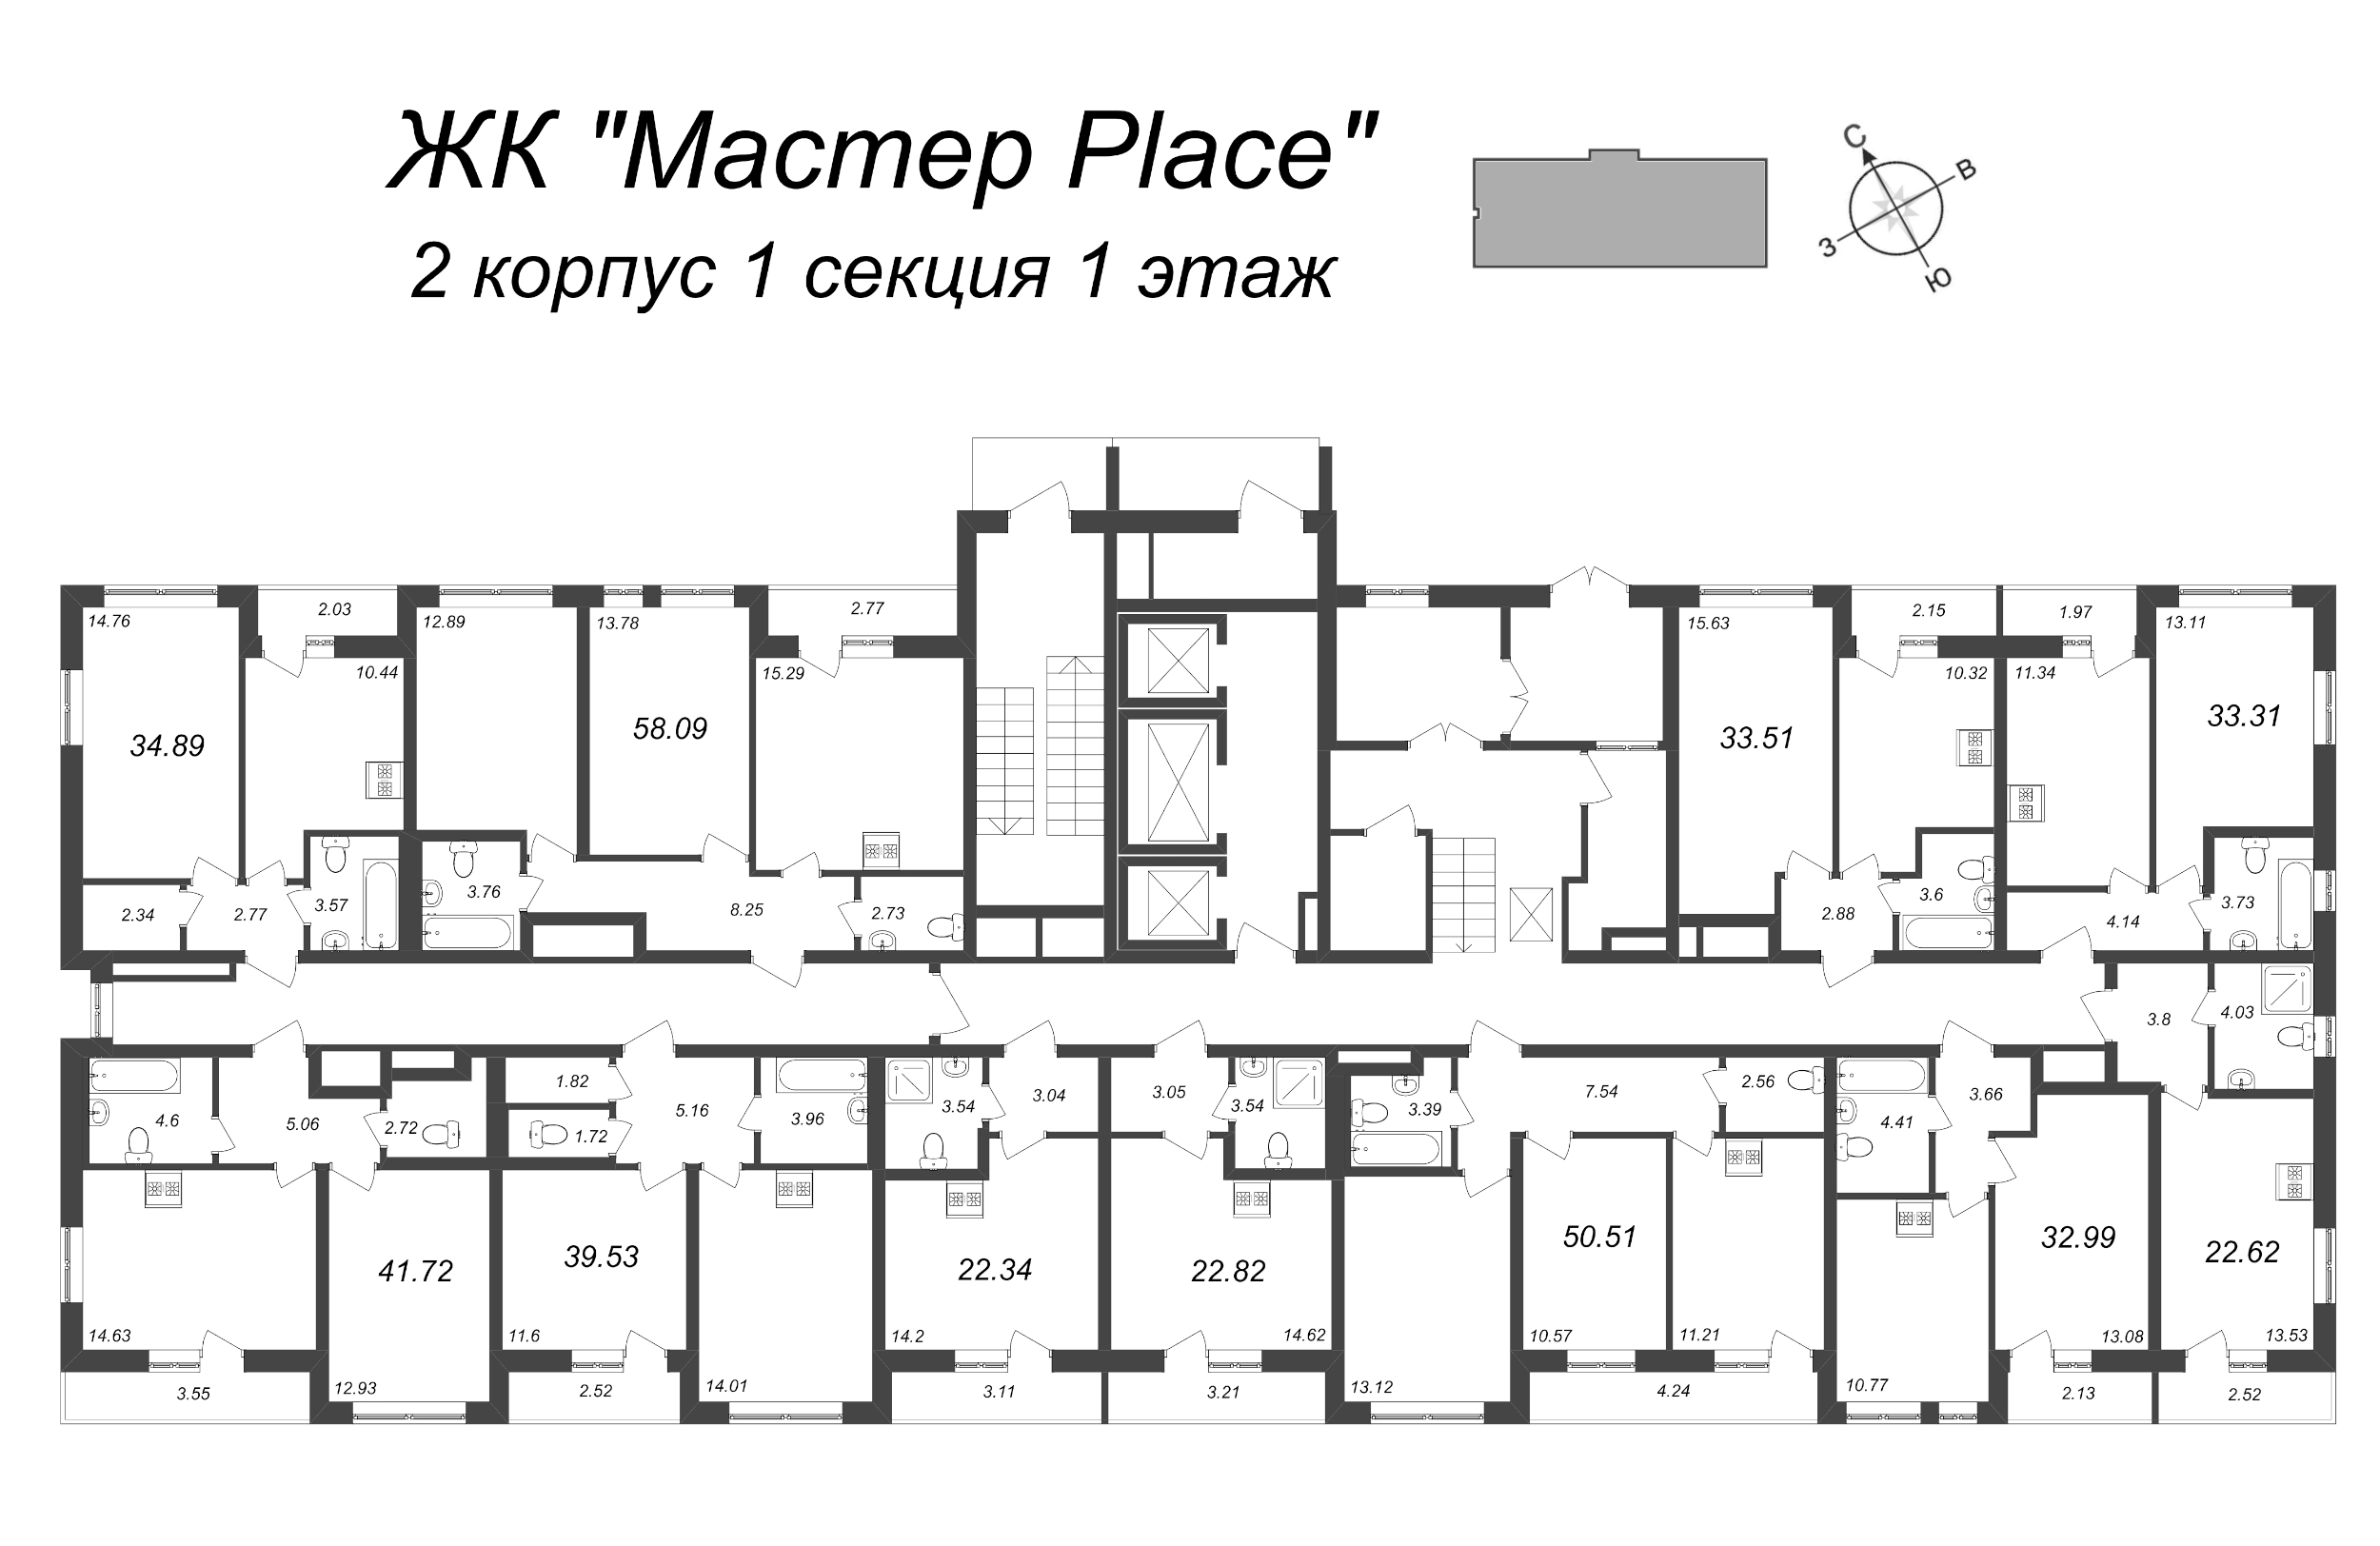 2-комнатная (Евро) квартира, 39.53 м² - планировка этажа